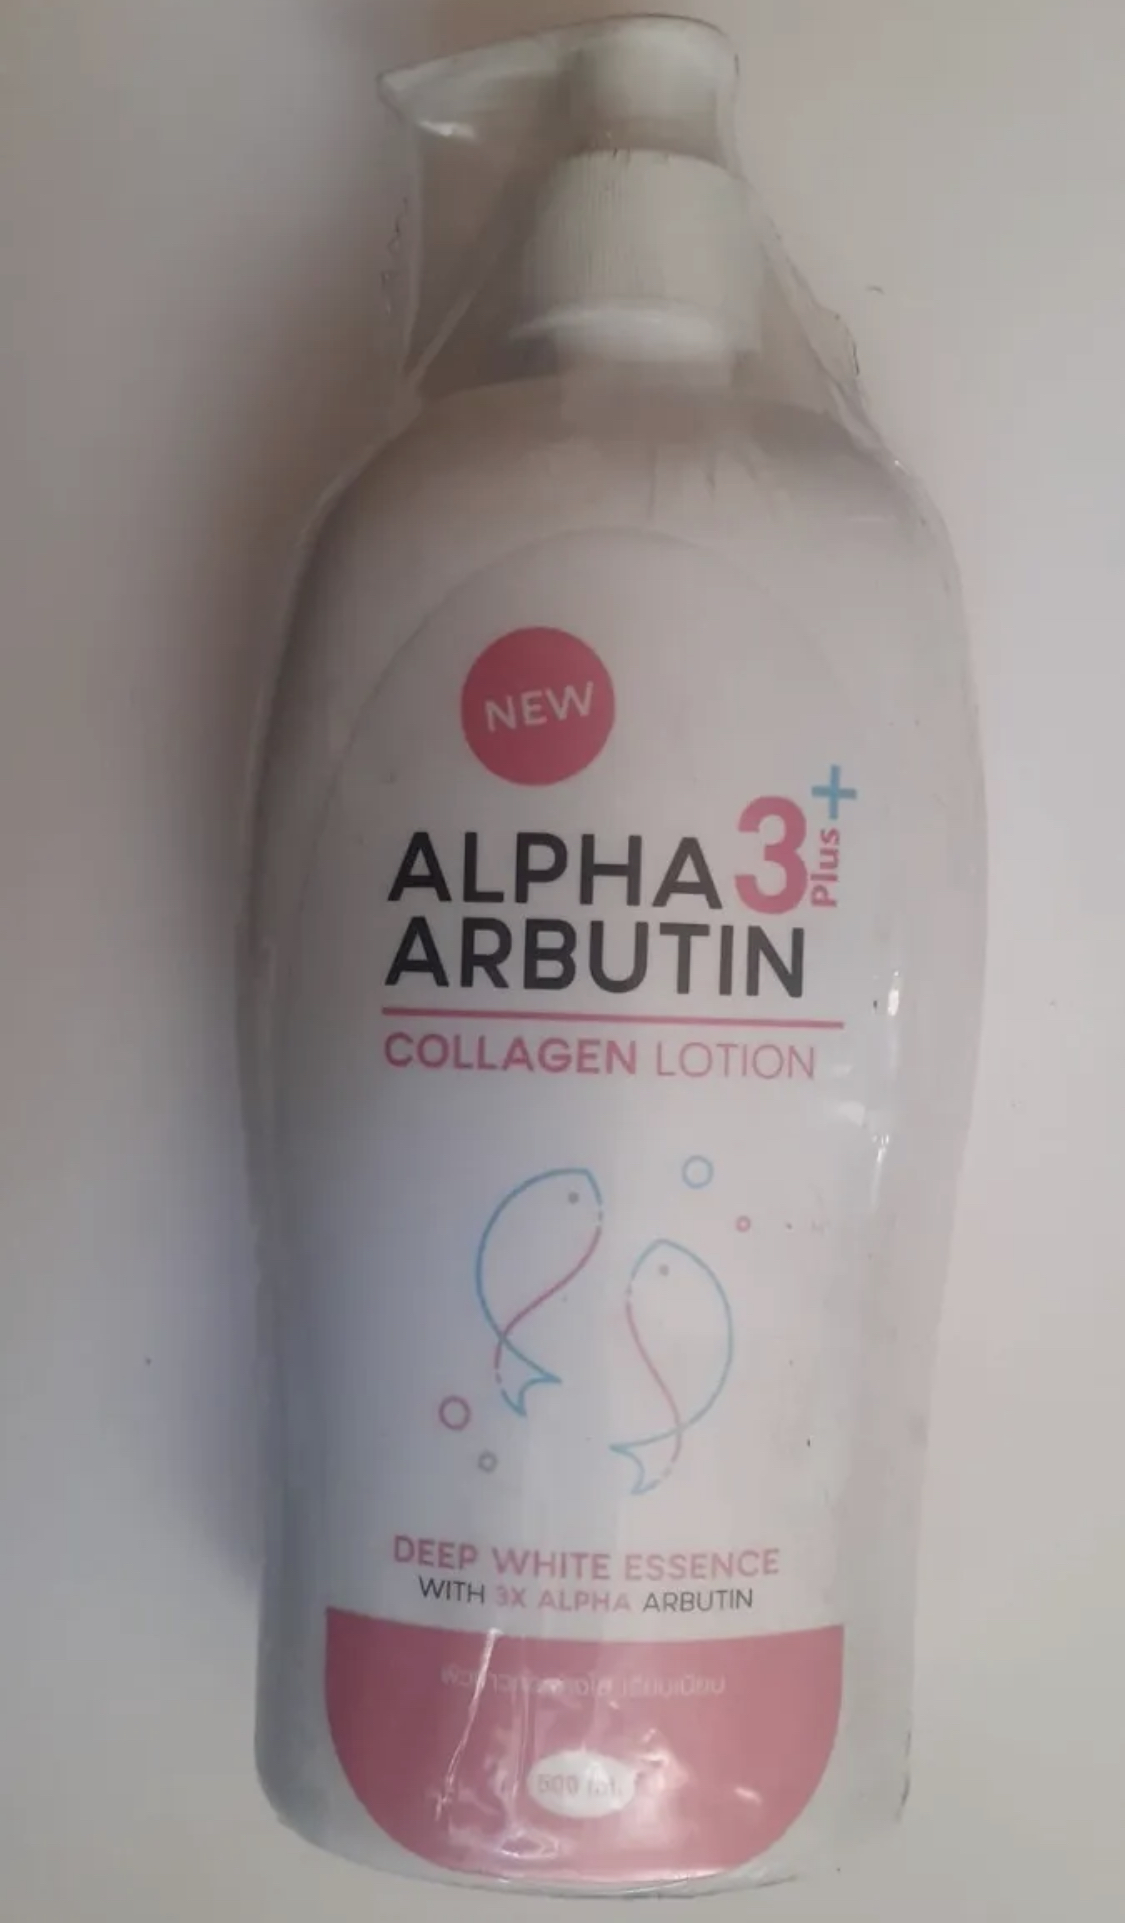 Alpha Arbutin 3 Plus Collagen Lotion Revealing new whiter smoother - Skin Glow Haven